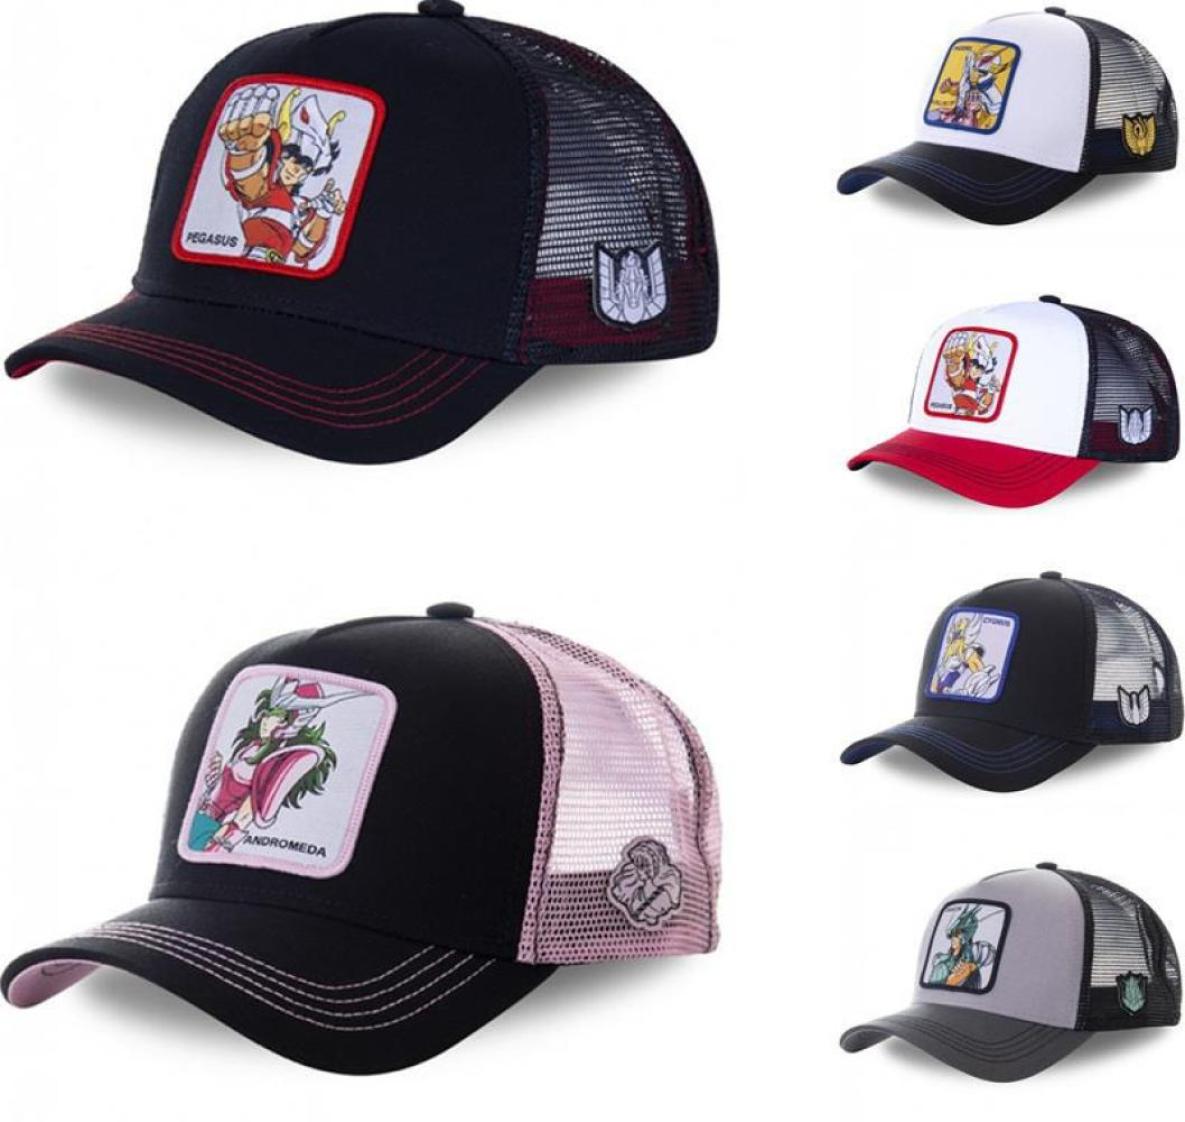 

2022 Saint Seiya Cartoon Anime Mesh Cap Baseball Caps for Men and Women Fashion2622676